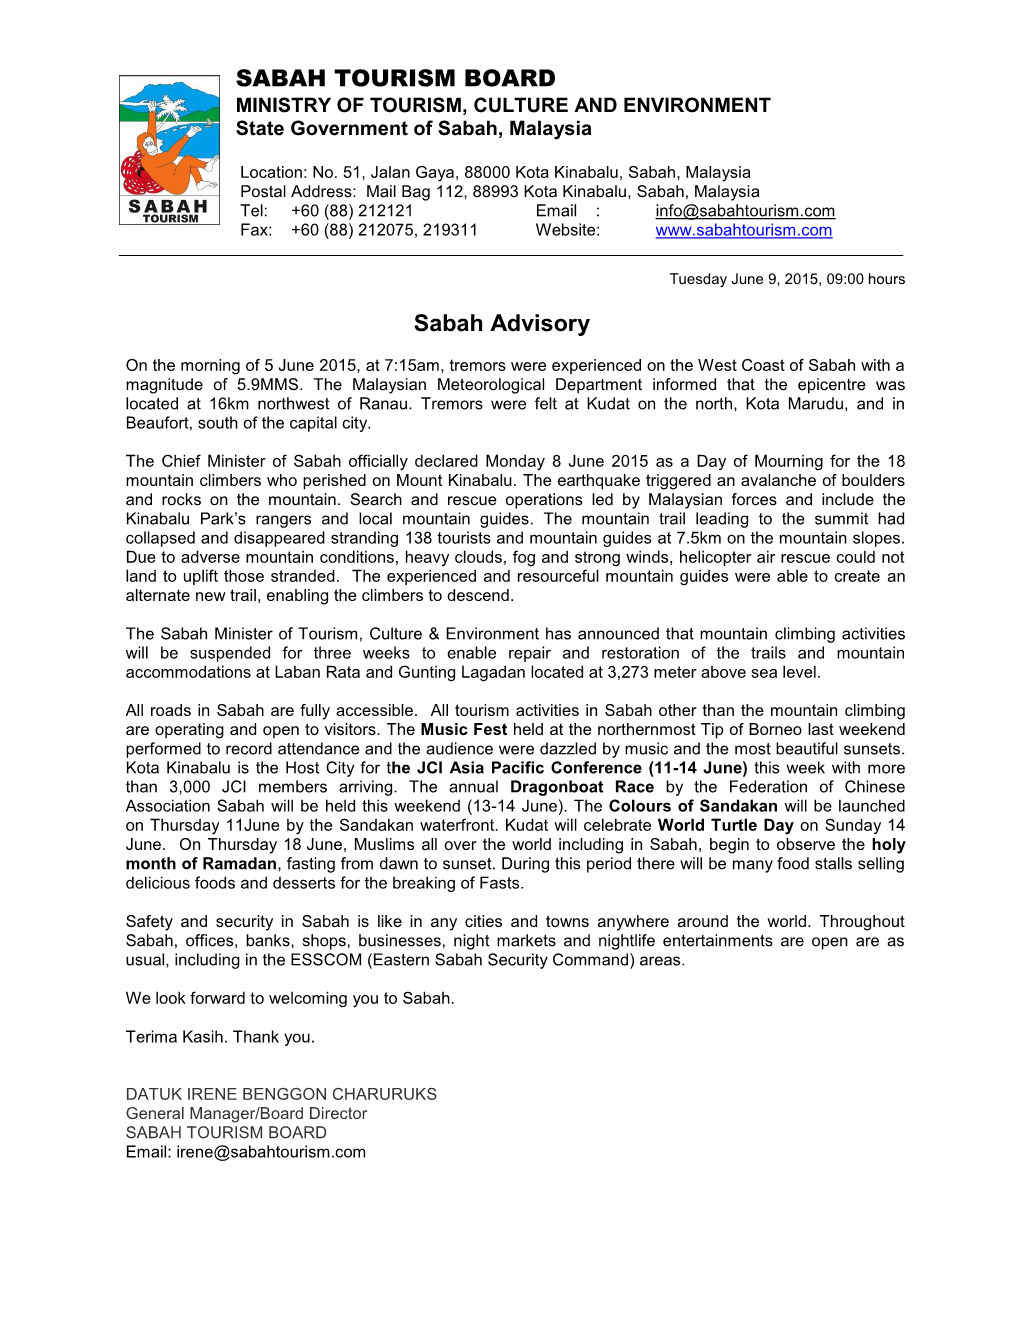 SABAH TOURISM BOARD Sabah Advisory